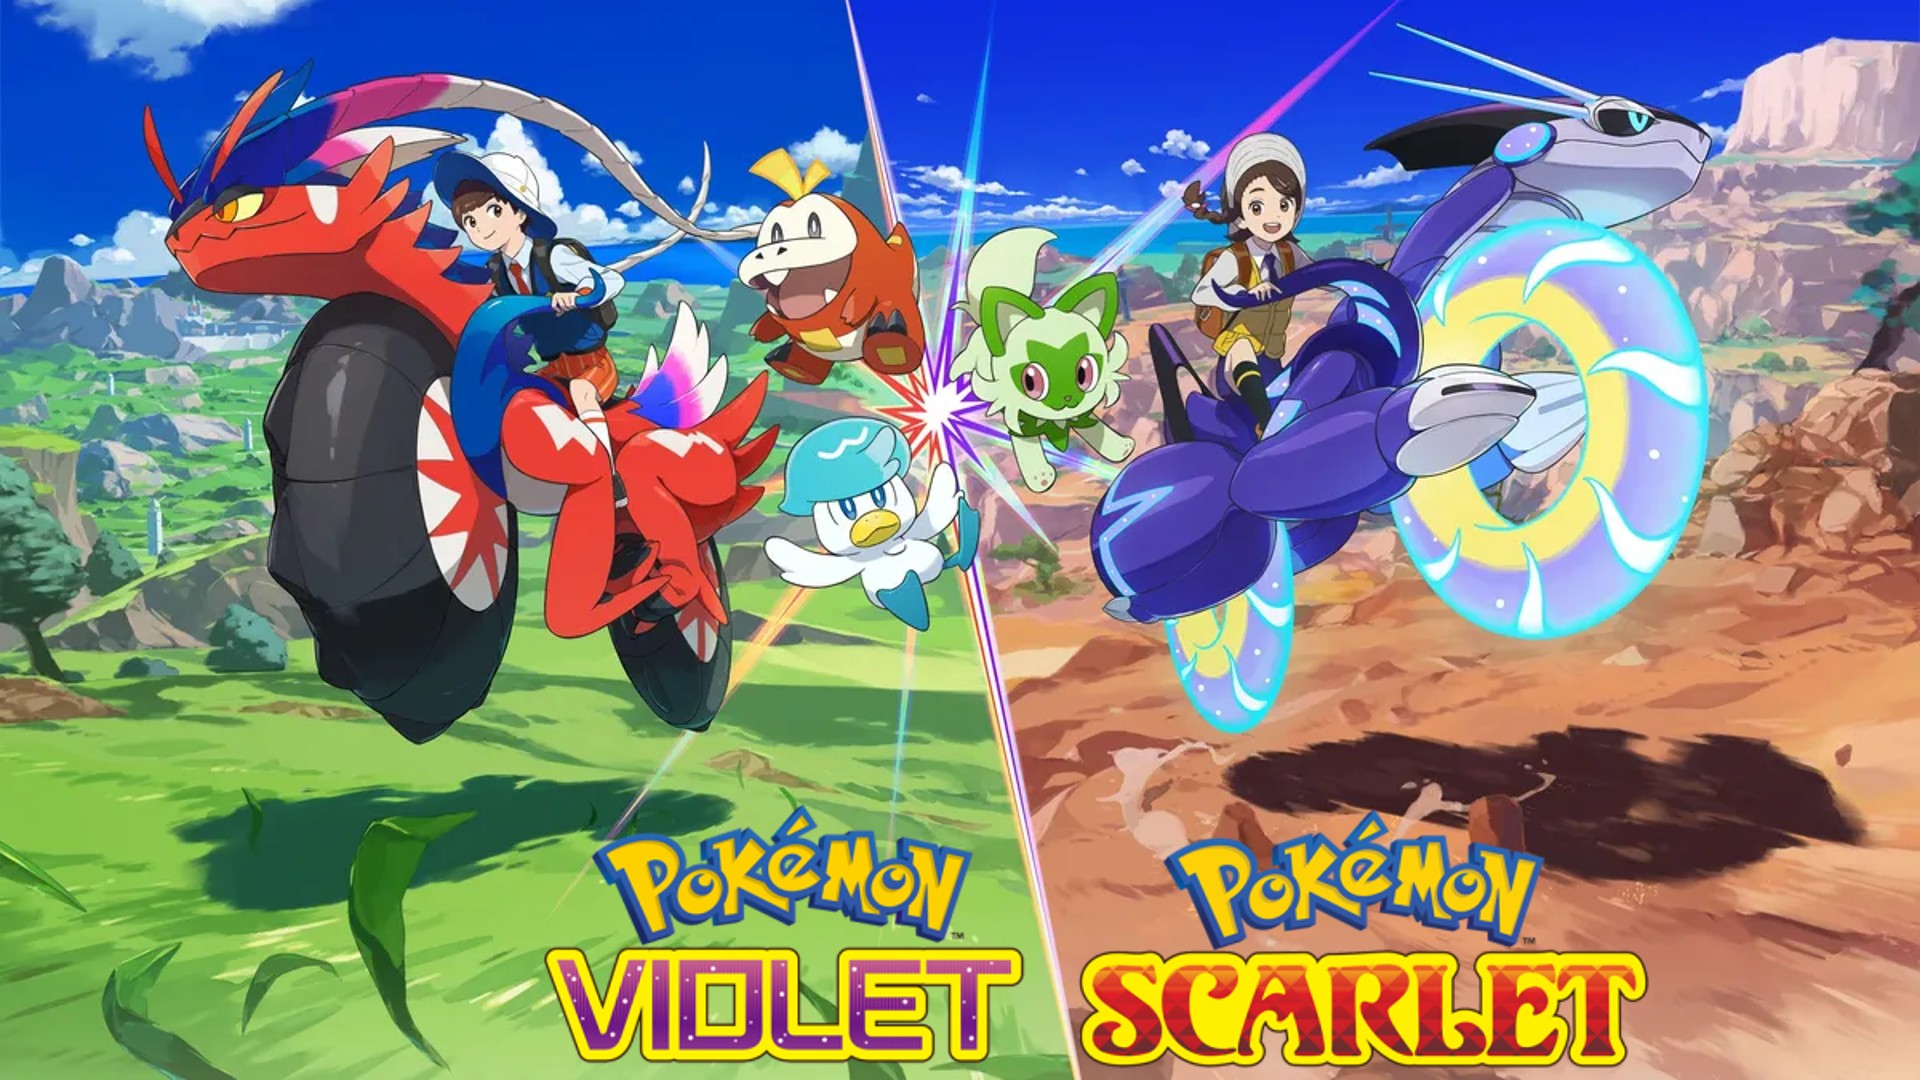 Pokémon: Scarlet and Violet Review - Worth a deep dive?